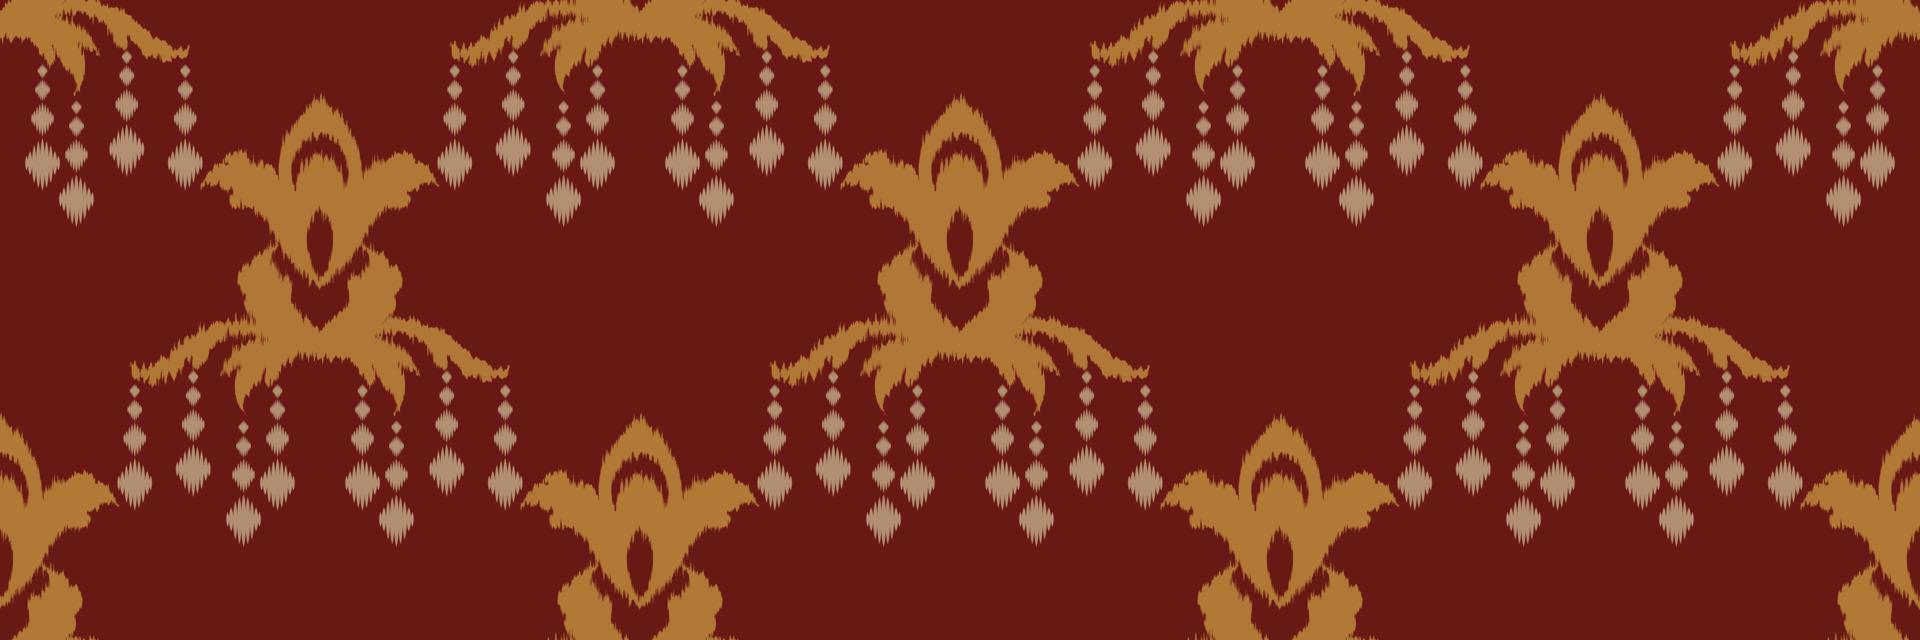 bordado escandinavo de damasco ikat, chevron tribal de patrones sin fisuras ikat, natividad étnica textil digital diseño asiático arte antiguo para estampados tela saree mughal franjas textura kurti kurtis kurtas vector